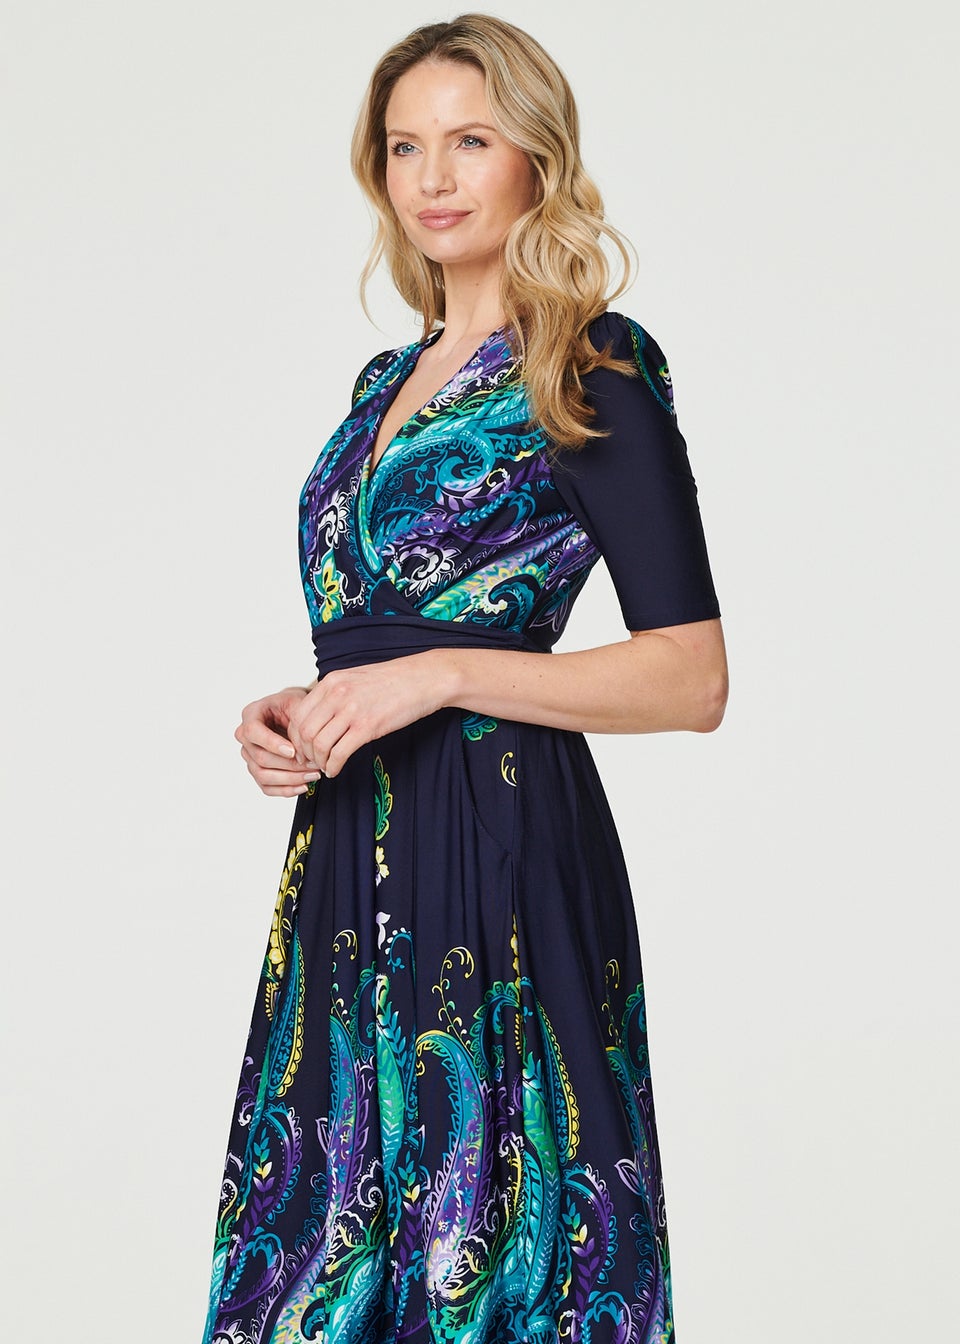 Izabel London Teal Printed Ruched Waist Midi Dress